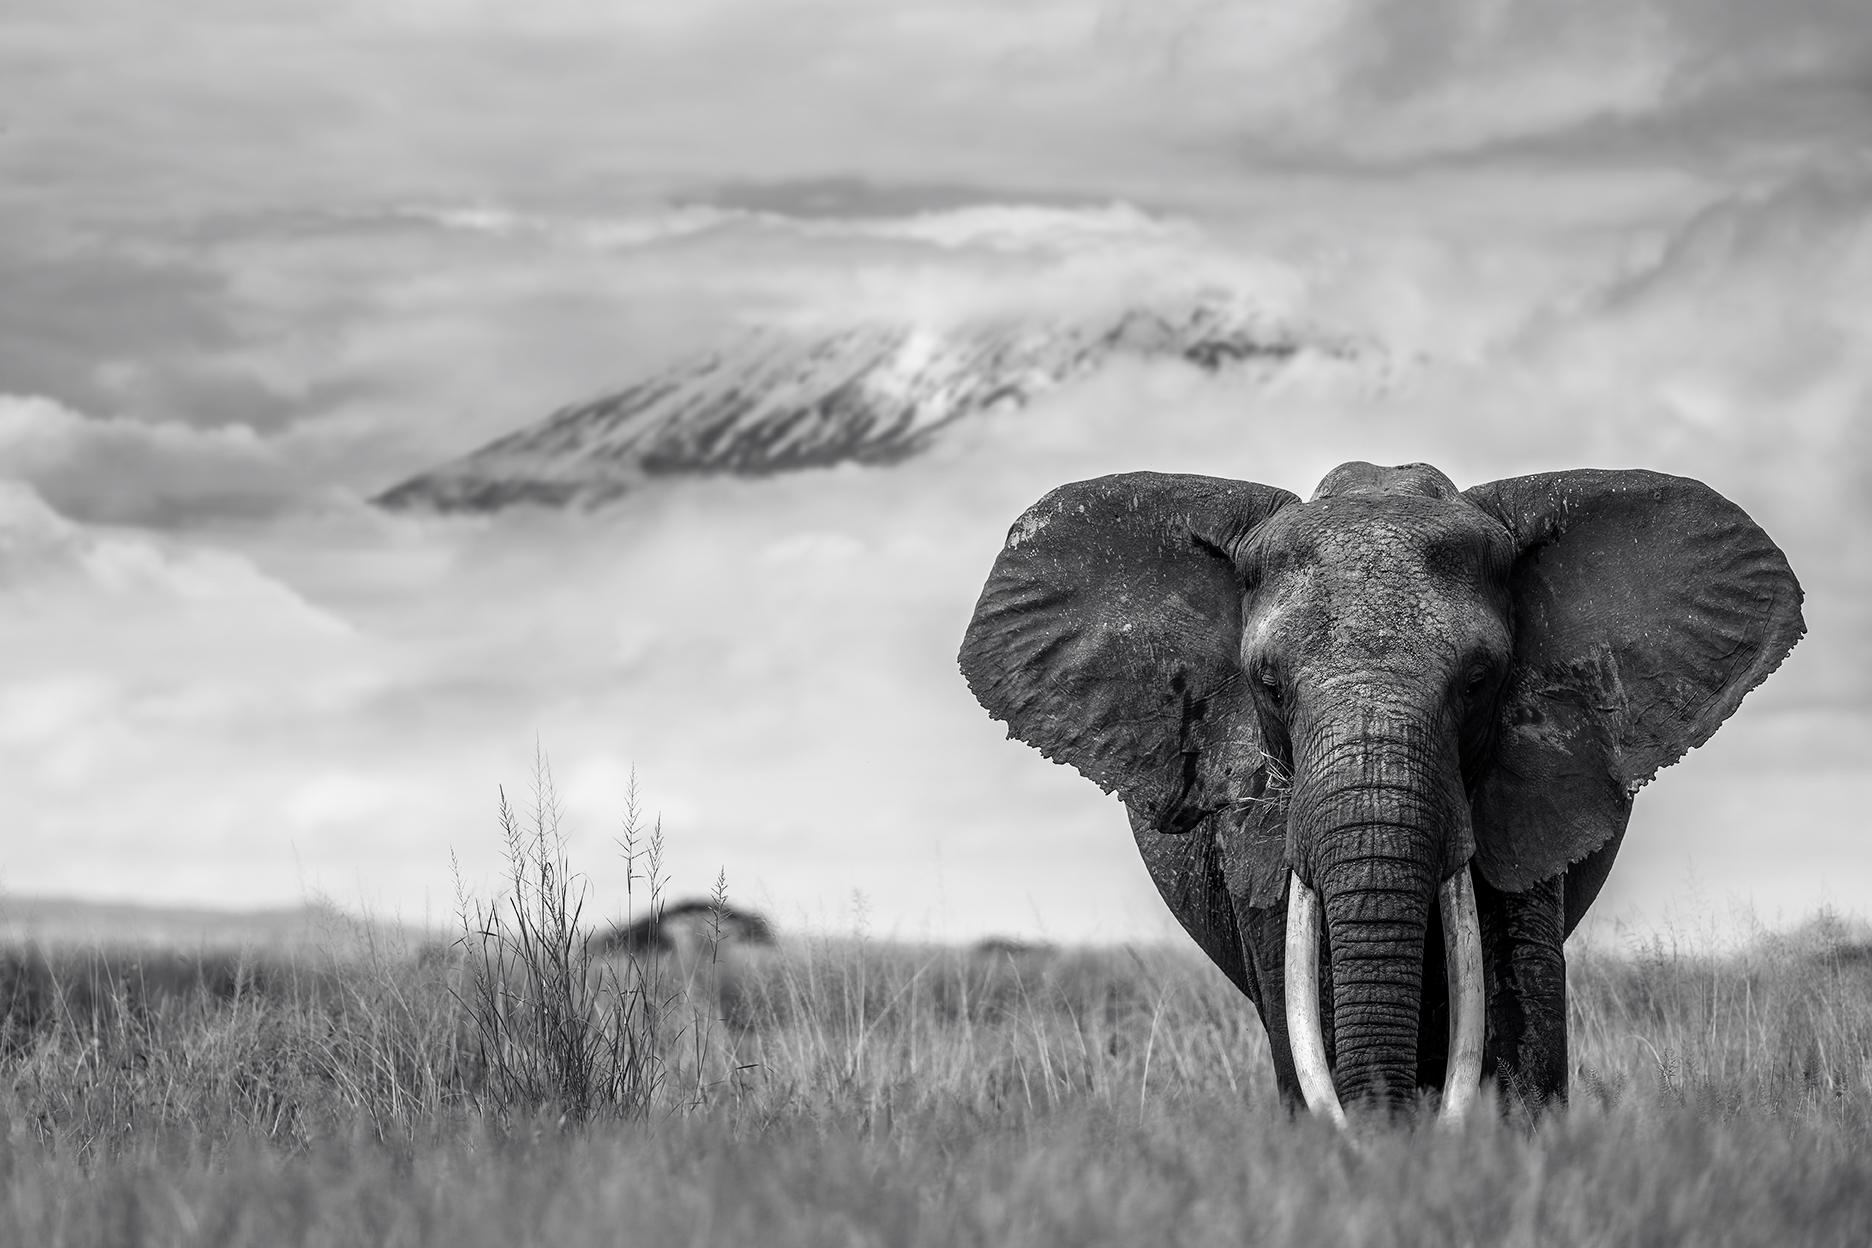 Gürdal Bibo Black and White Photograph - "Mammoth"- Massive African Elephant with Mount Kilimanjaro Backdrop